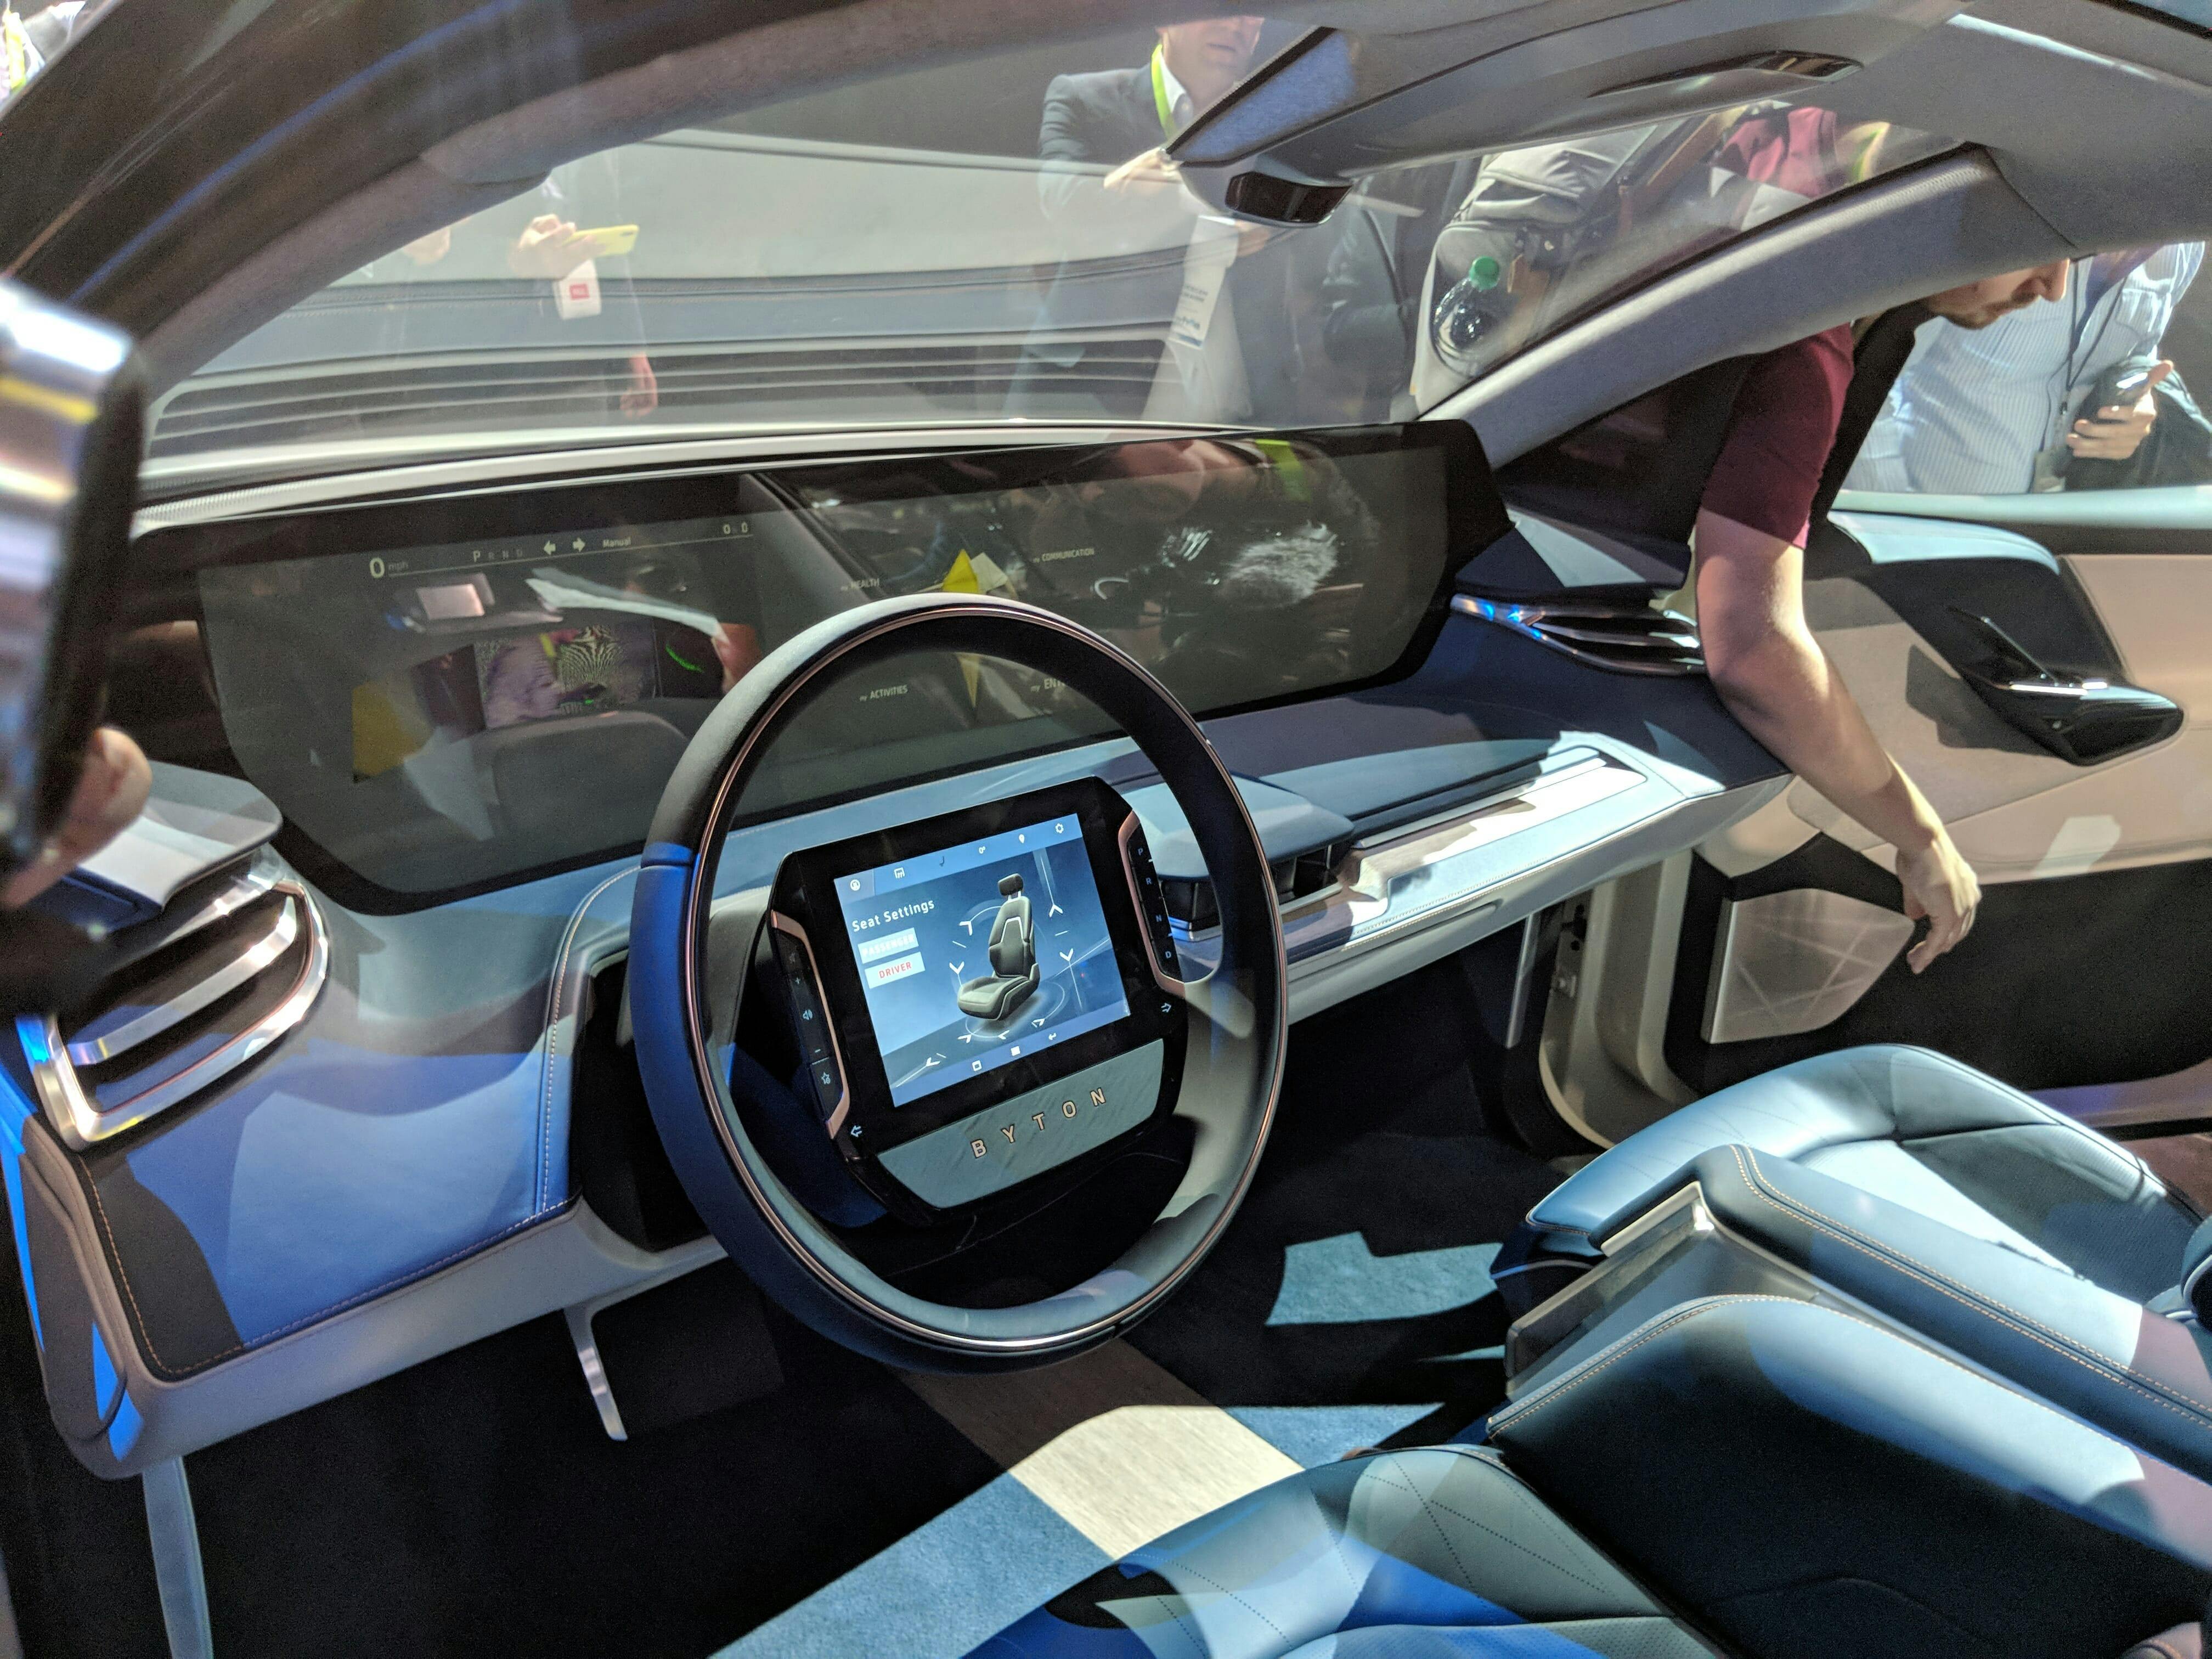 byton interior electric car self-driving display